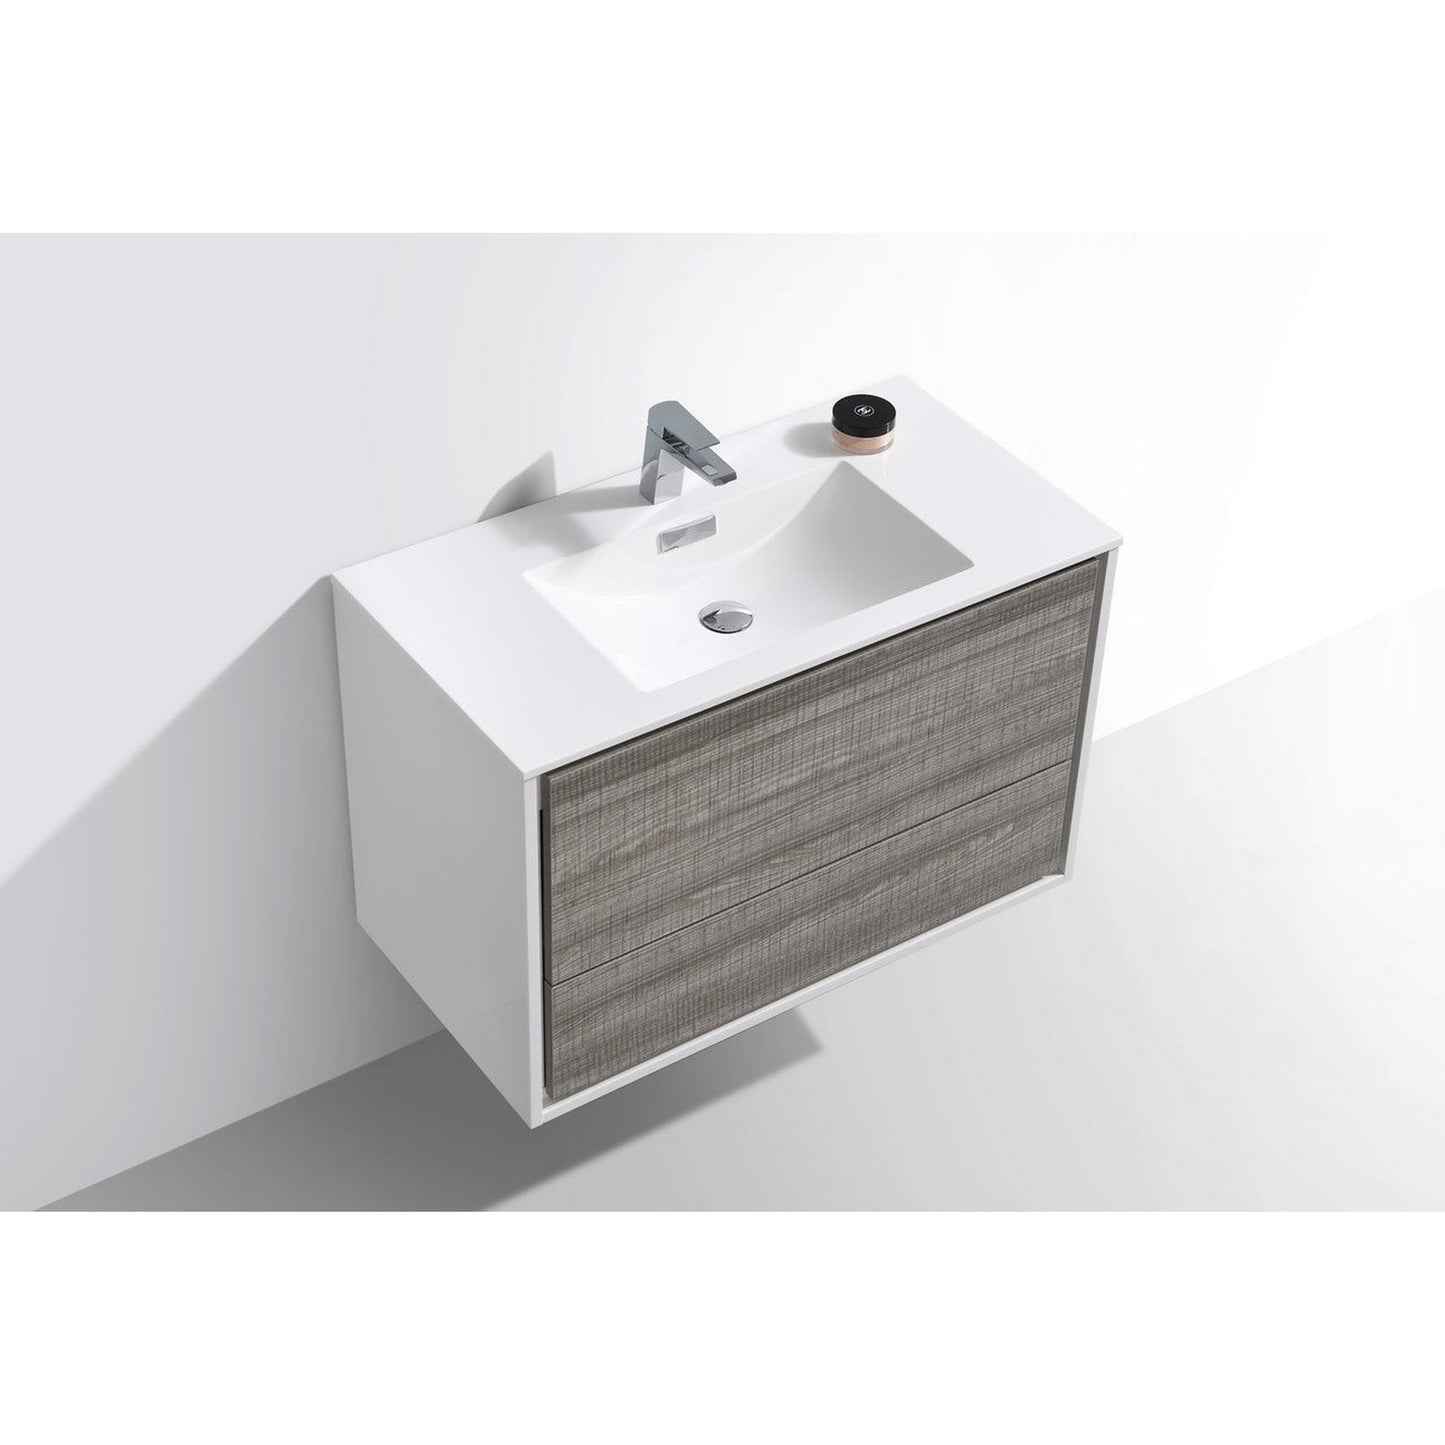 KubeBath DeLusso 36" Ash Gray Wall Mounted Modern Bathroom Vanity With Single Integrated Acrylic Sink With Overflow